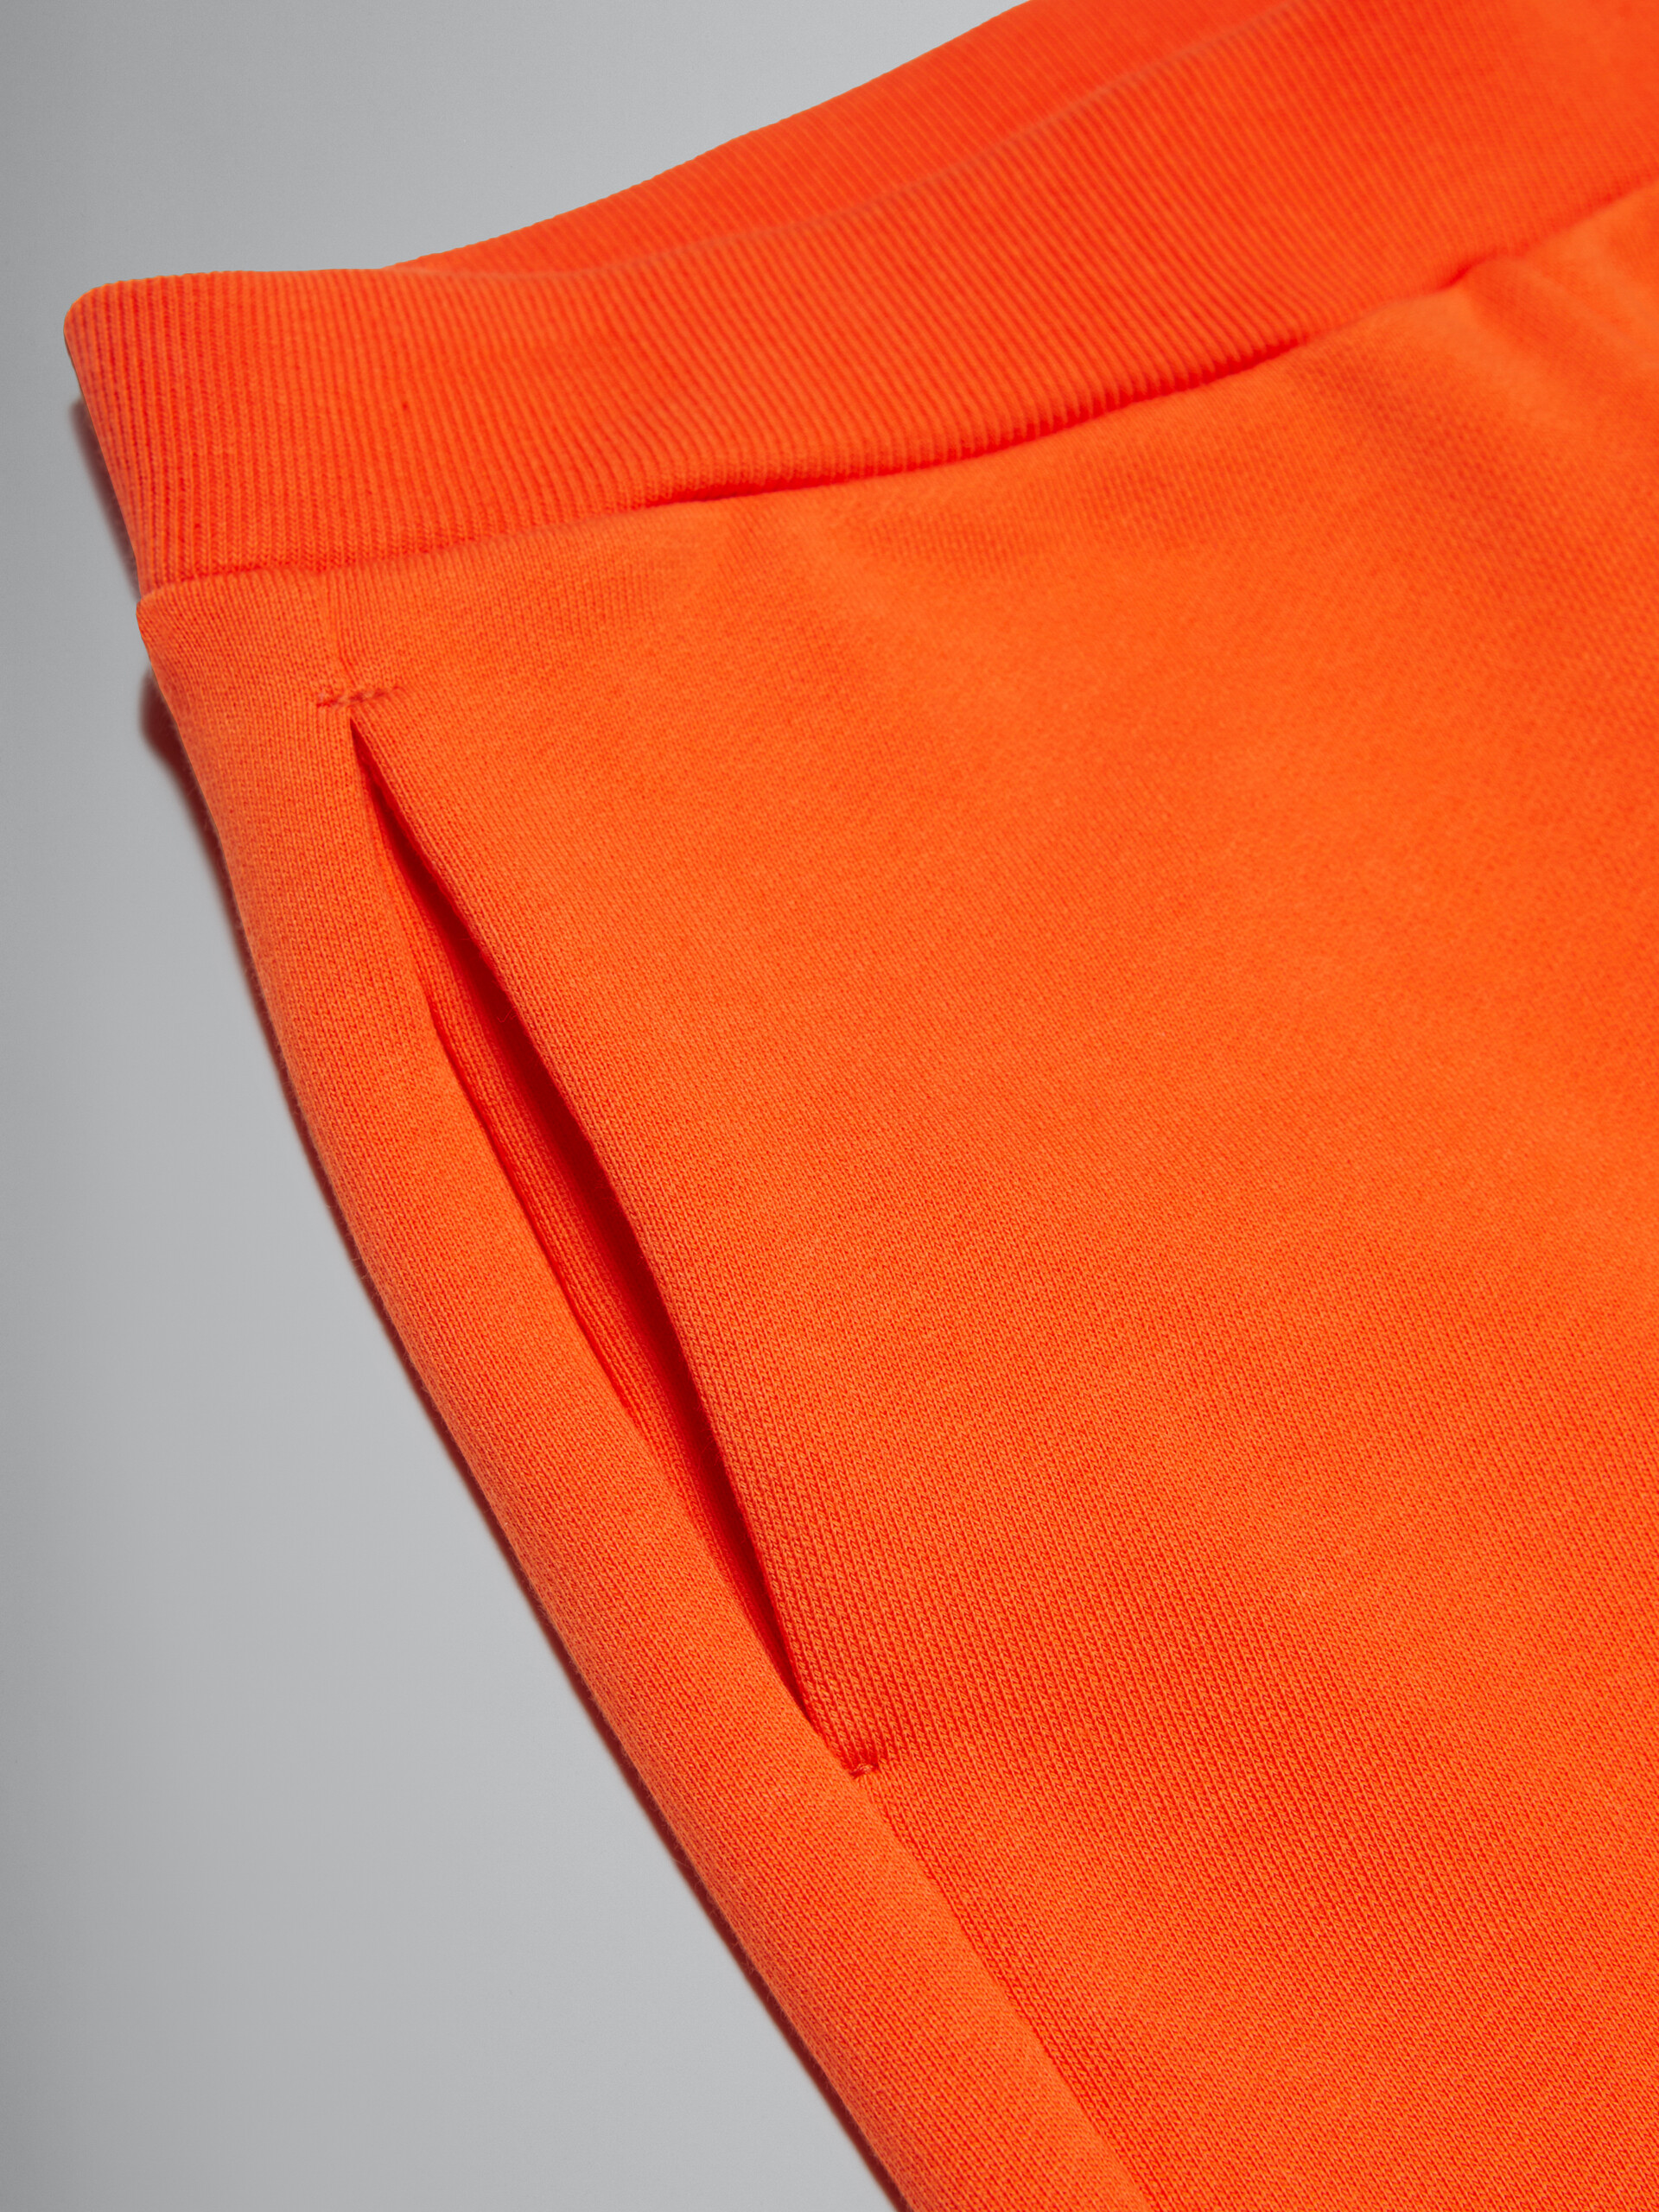 Pantalón corto naranja de felpa con logotipo Round - Pantalones - Image 4